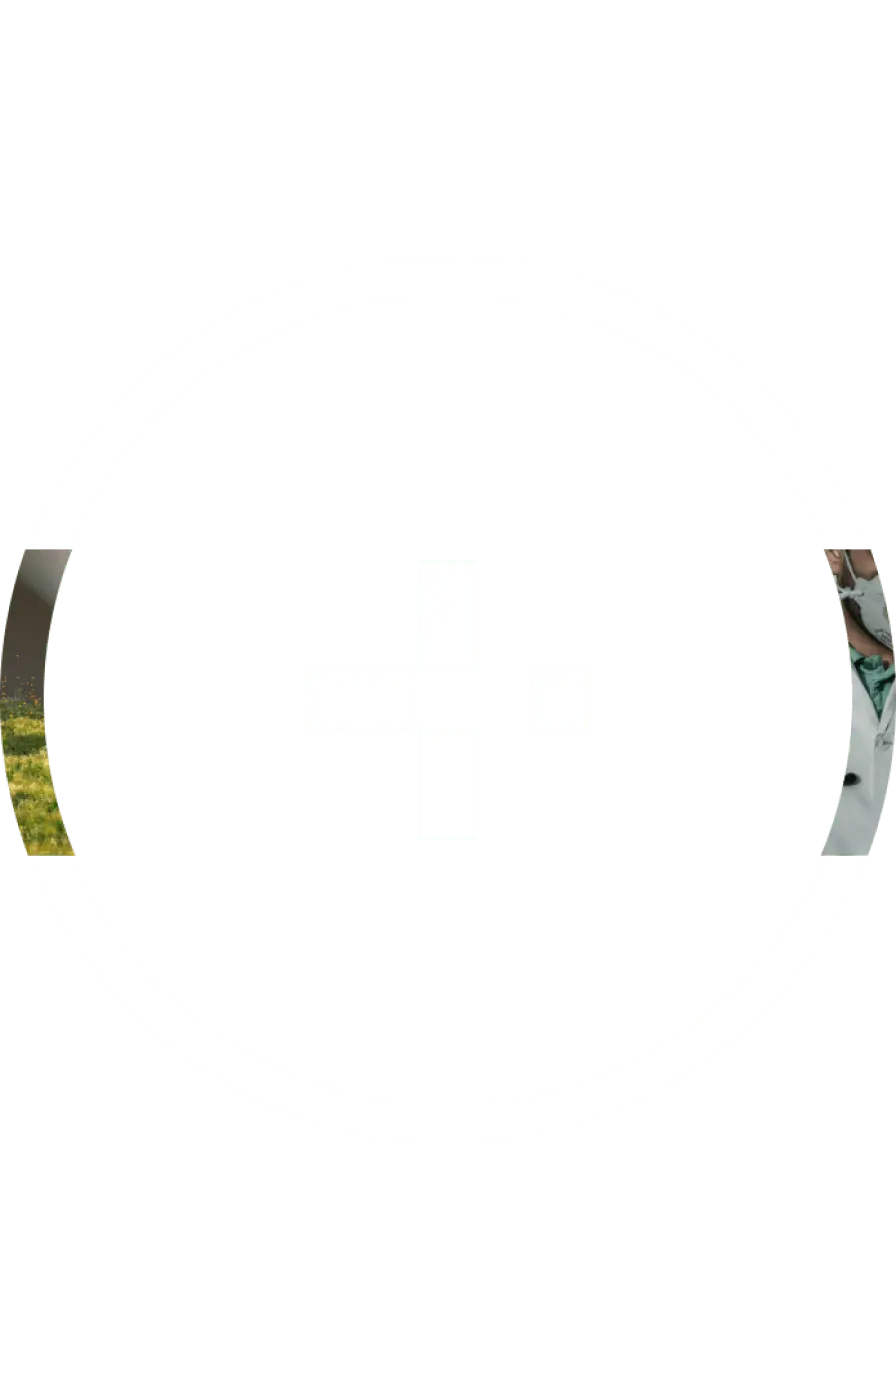 Go Circular - Circle Image with icon